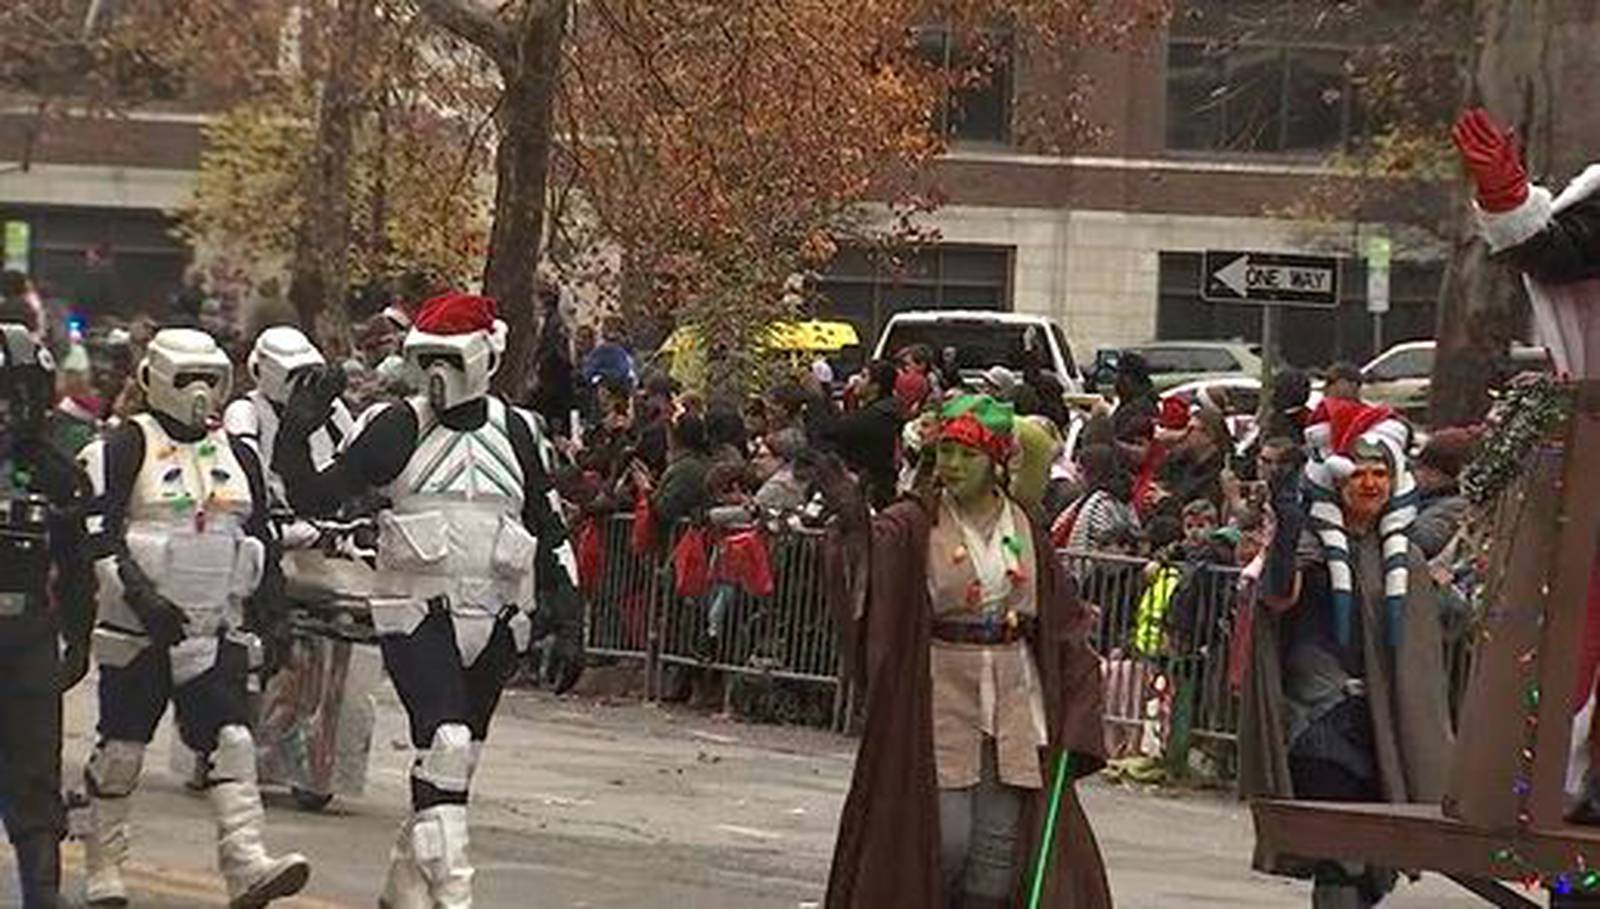 Tulsa Christmas Parade kicks off in downtown Tulsa FOX23 News